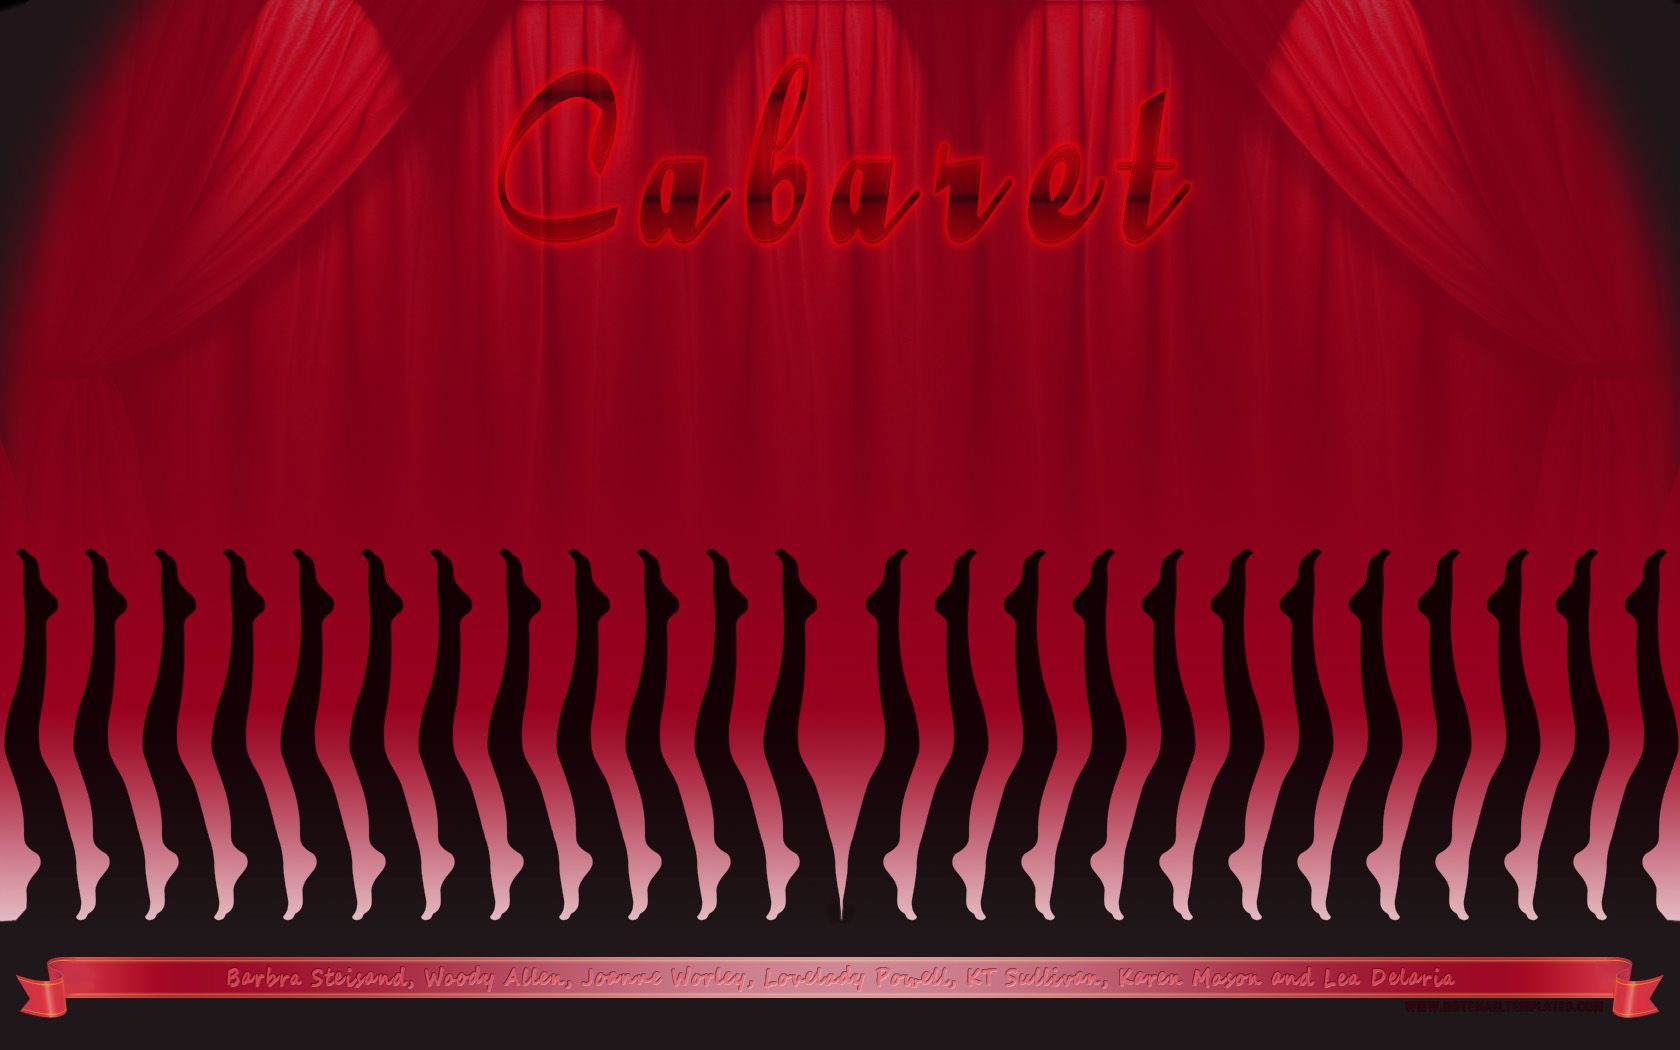 Cabaret Wallpaper. Cabaret Wallpaper, Connecticut Cabaret Theatre Wallpaper and Cabaret Broadway Wallpaper